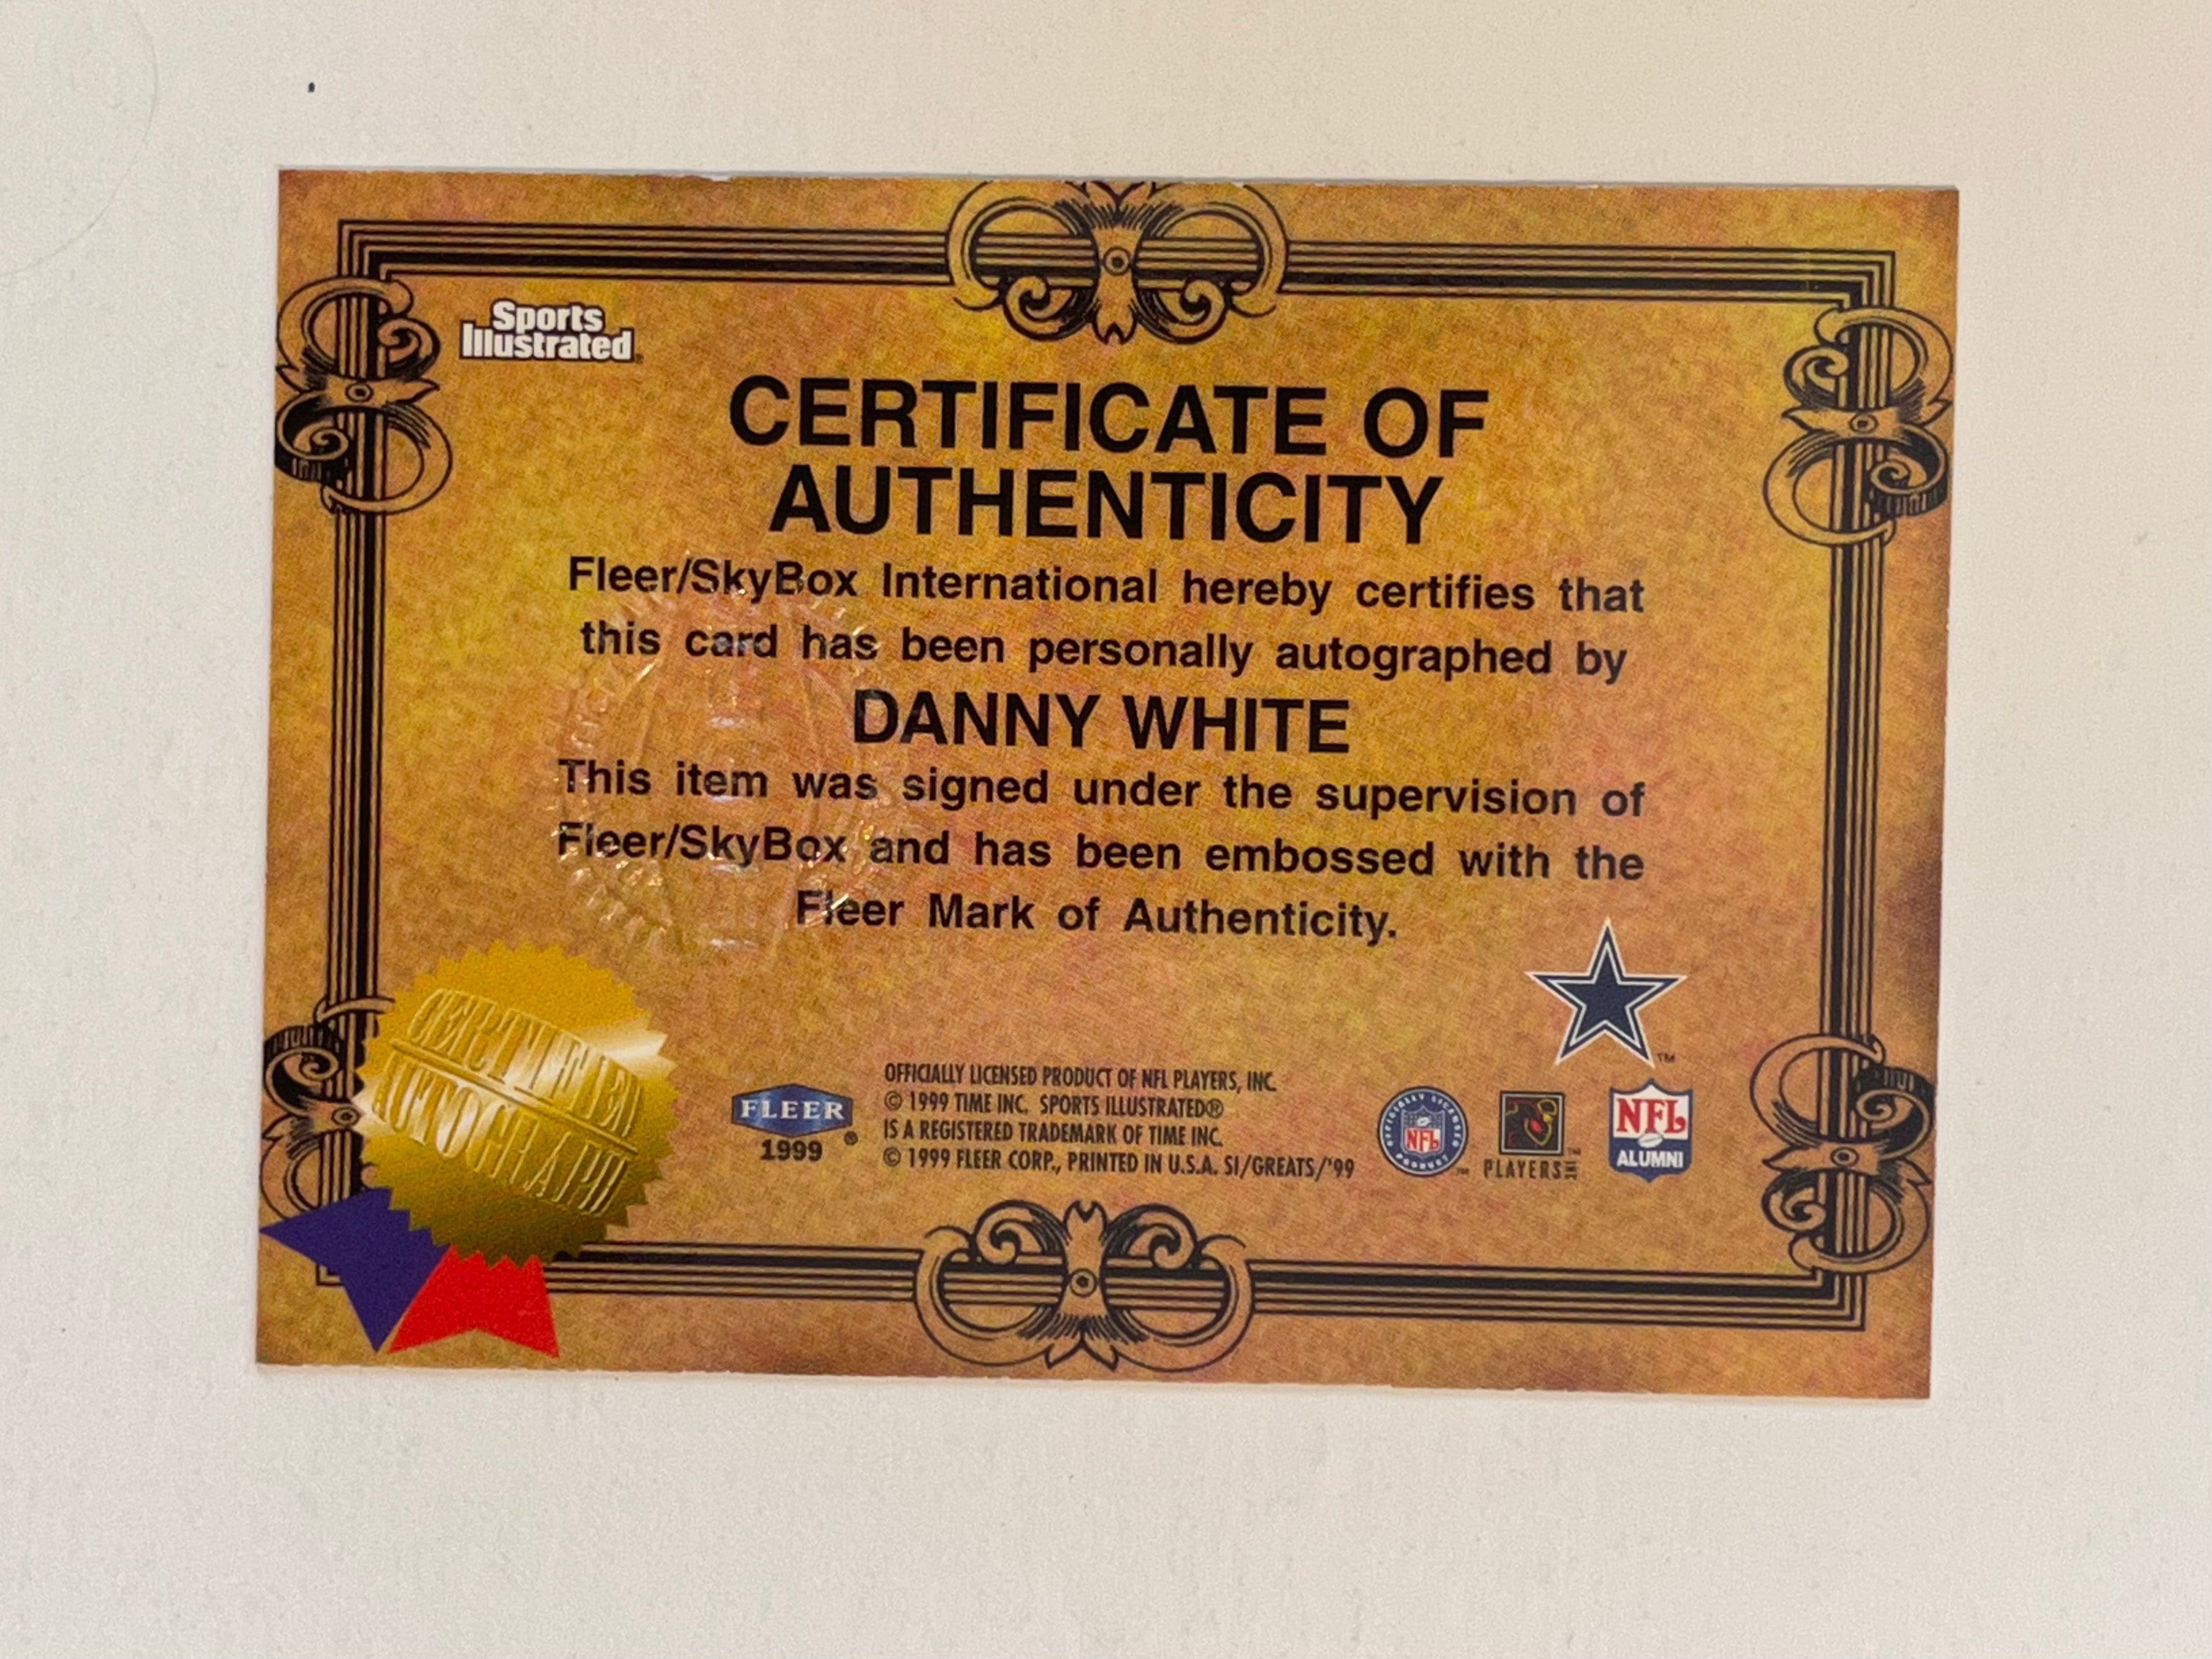 Dallas Cowboys Danny White sports illustrated autograph insert card